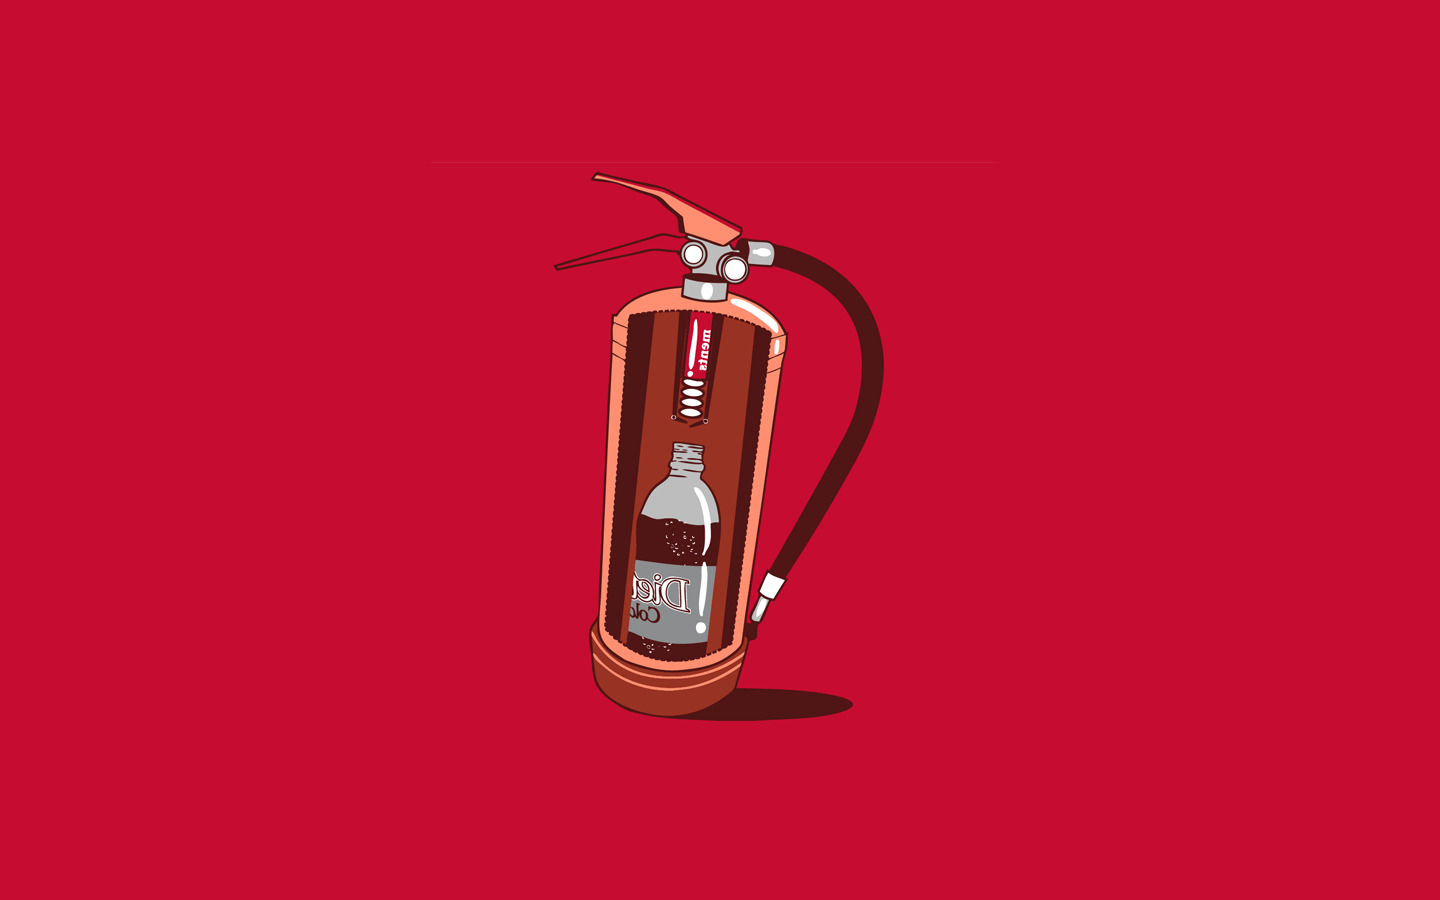 threadless, Simple, Minimalism, Humor, Fire Extinguishers, Coca Cola, Mentos, Red Wallpaper